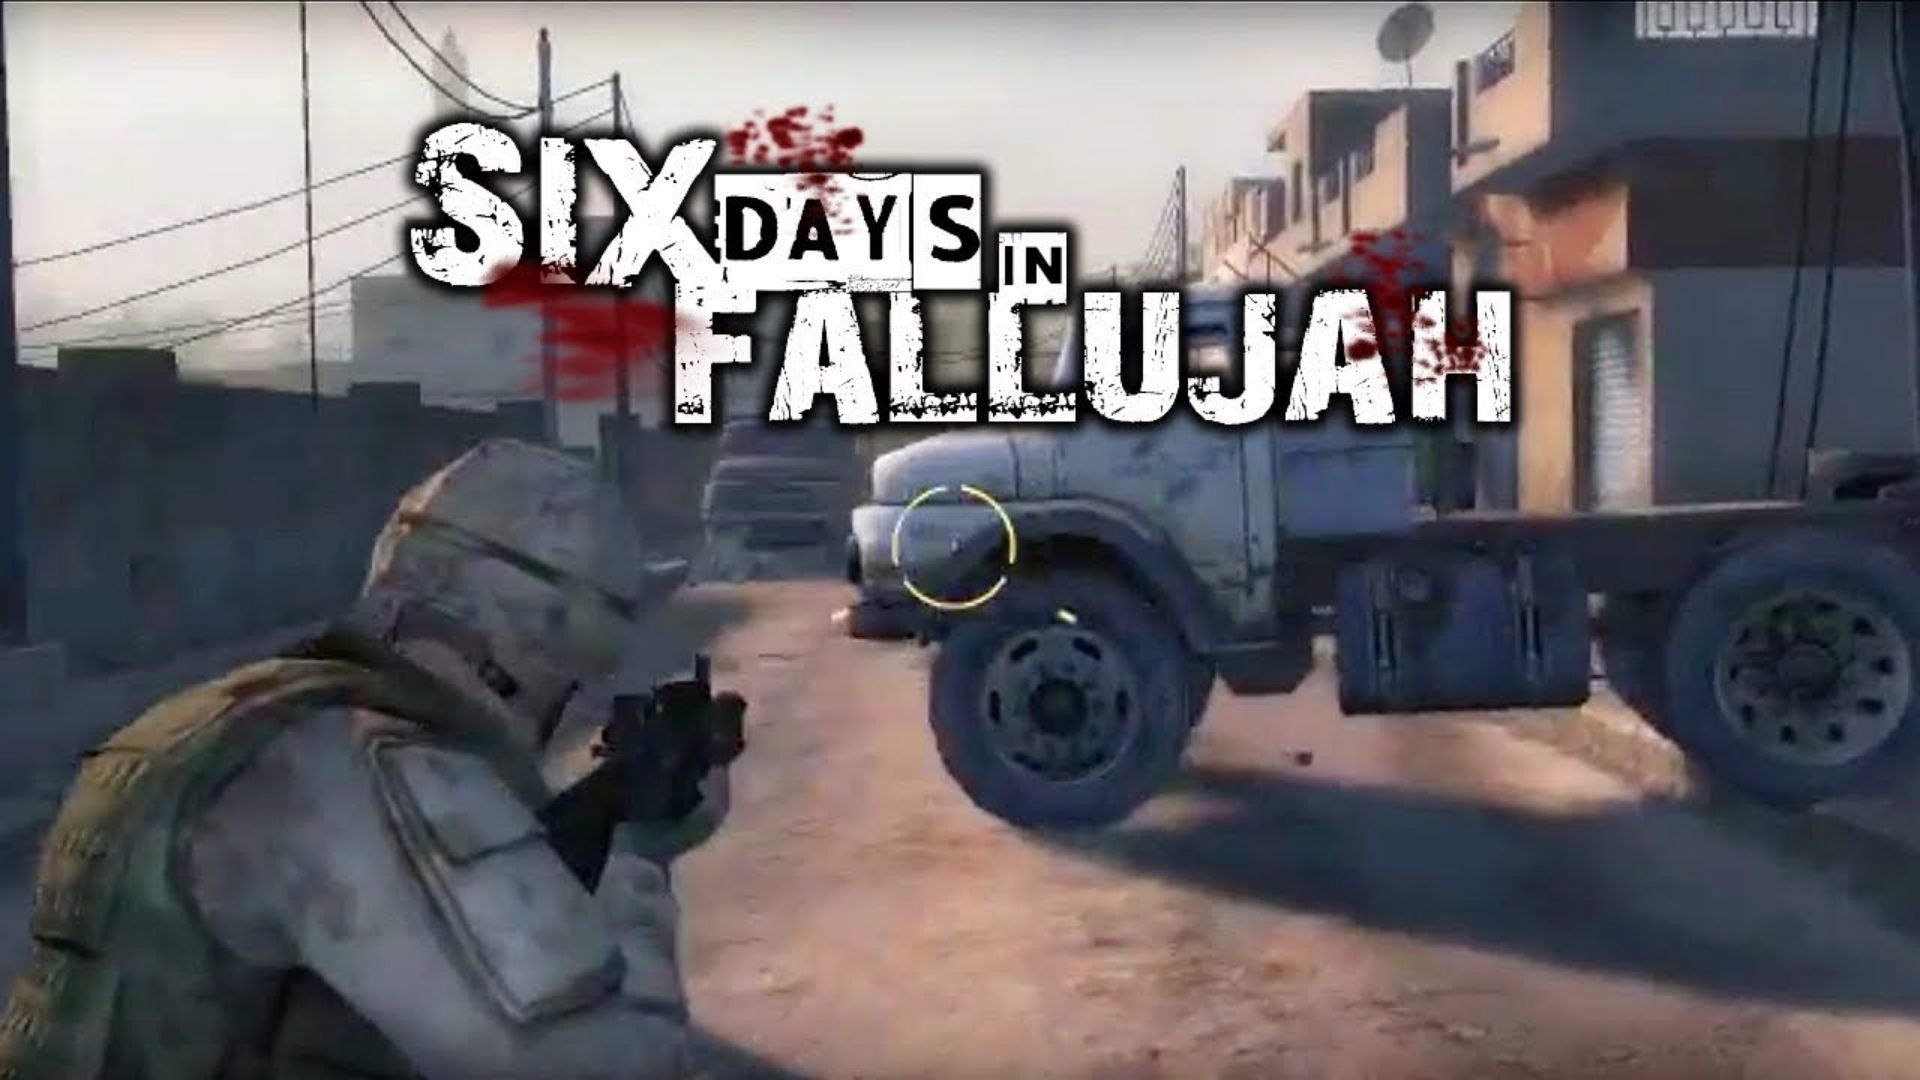 The Original Six Days in Fallujah